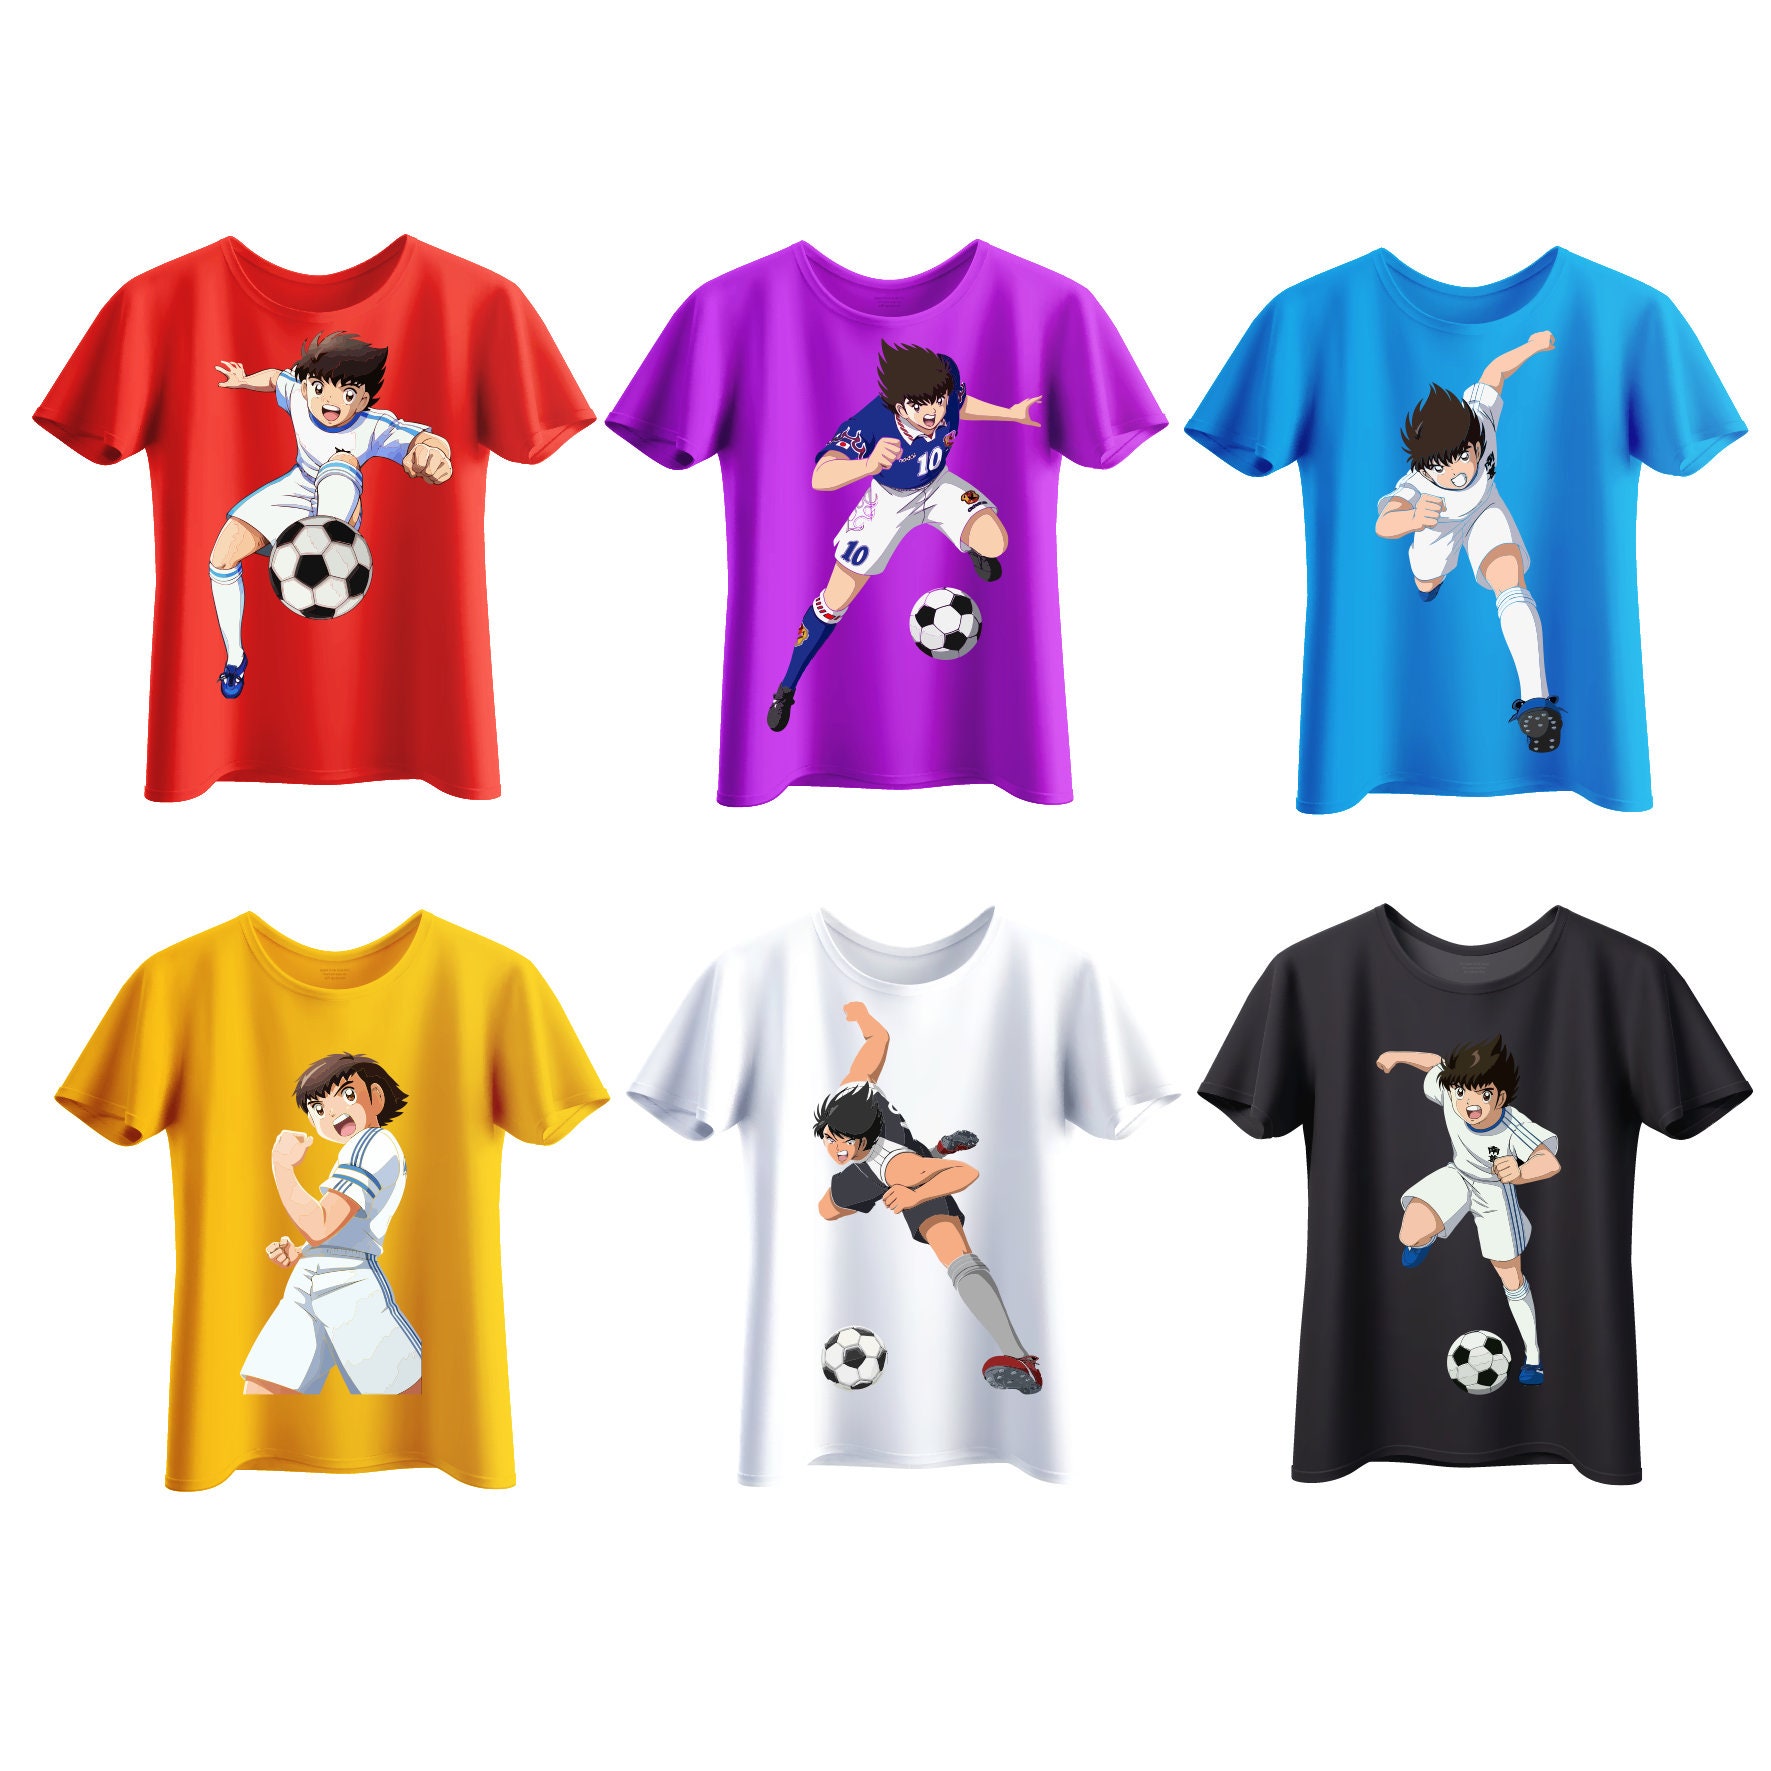 Oliver And Benji Mark Lenders Shirt, Oliver And Benji Soccer Kit, Captain  Tsubasa, Nankatsu School, Mark Lenders Soccer Jersey